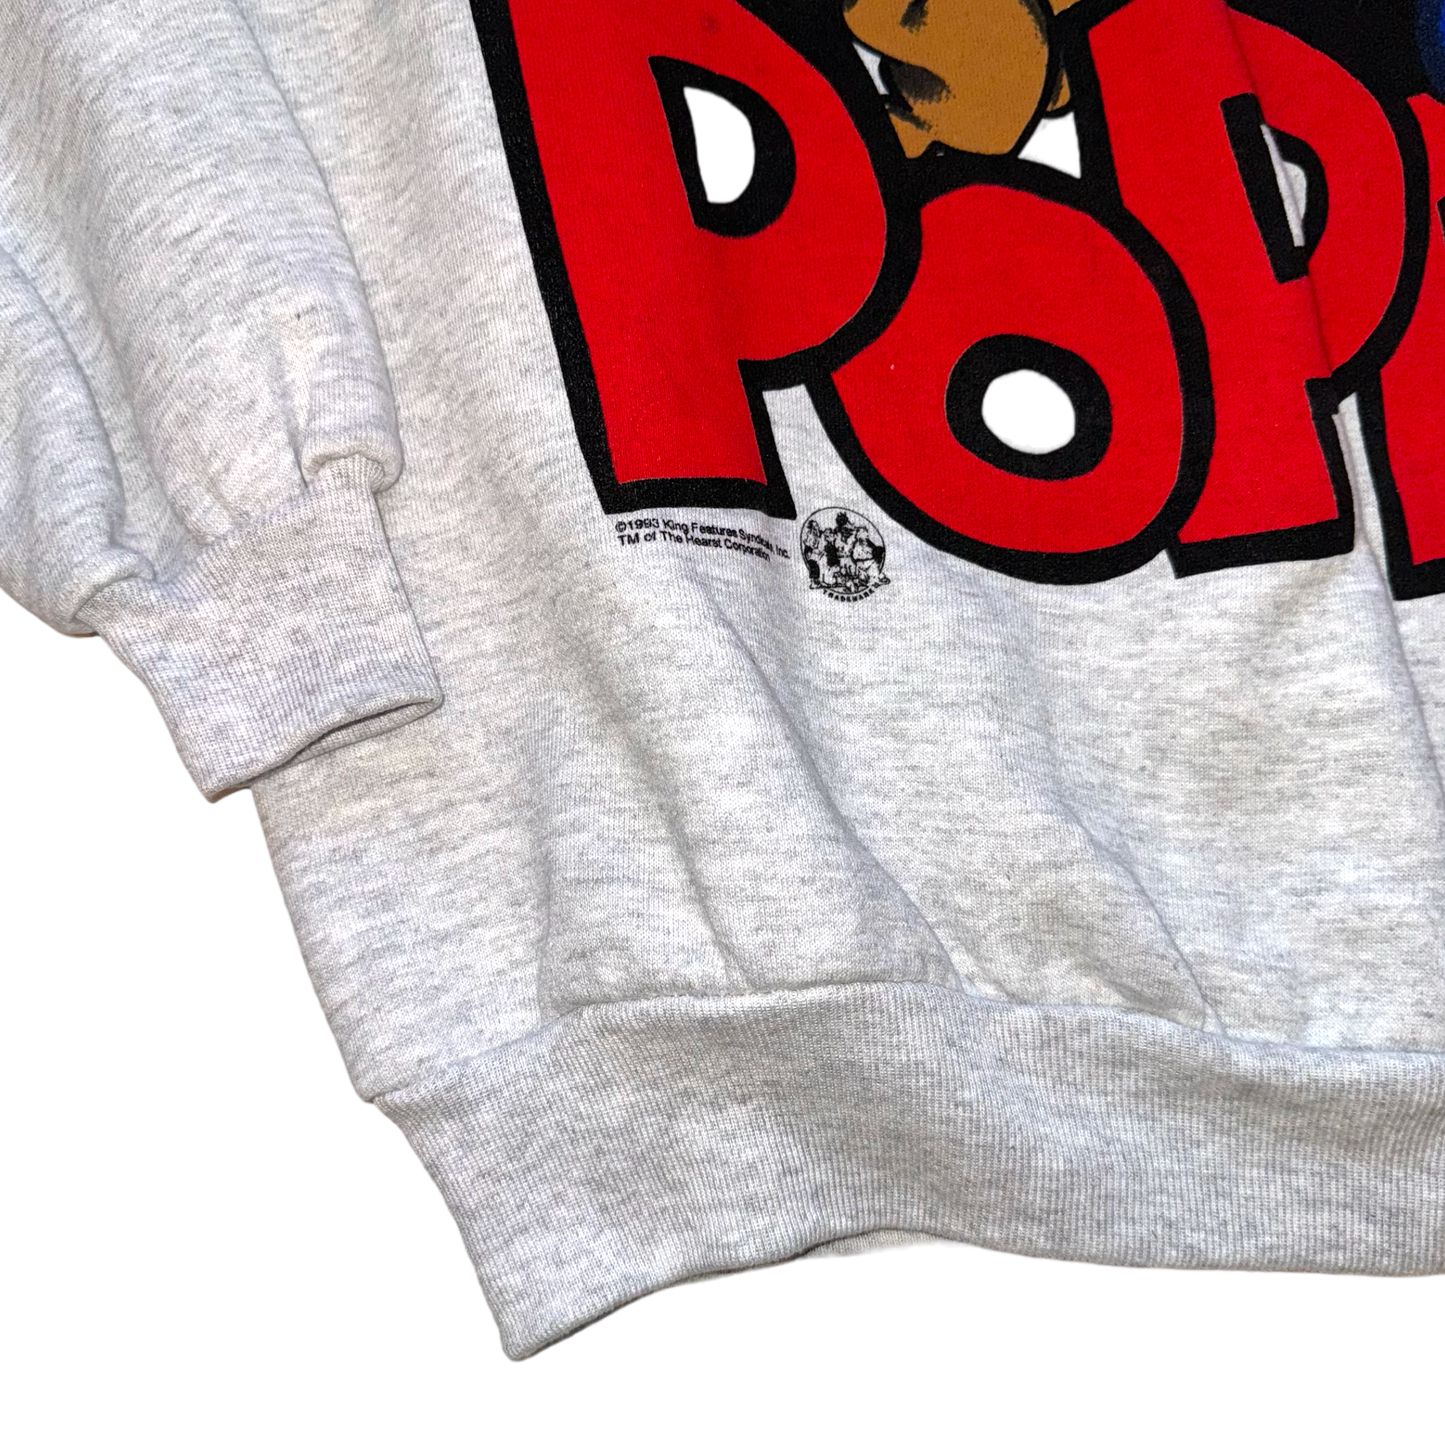 King Features Syndicate x Ross Int. - Popeye Vintage 1993 Crewneck Sweatshirt